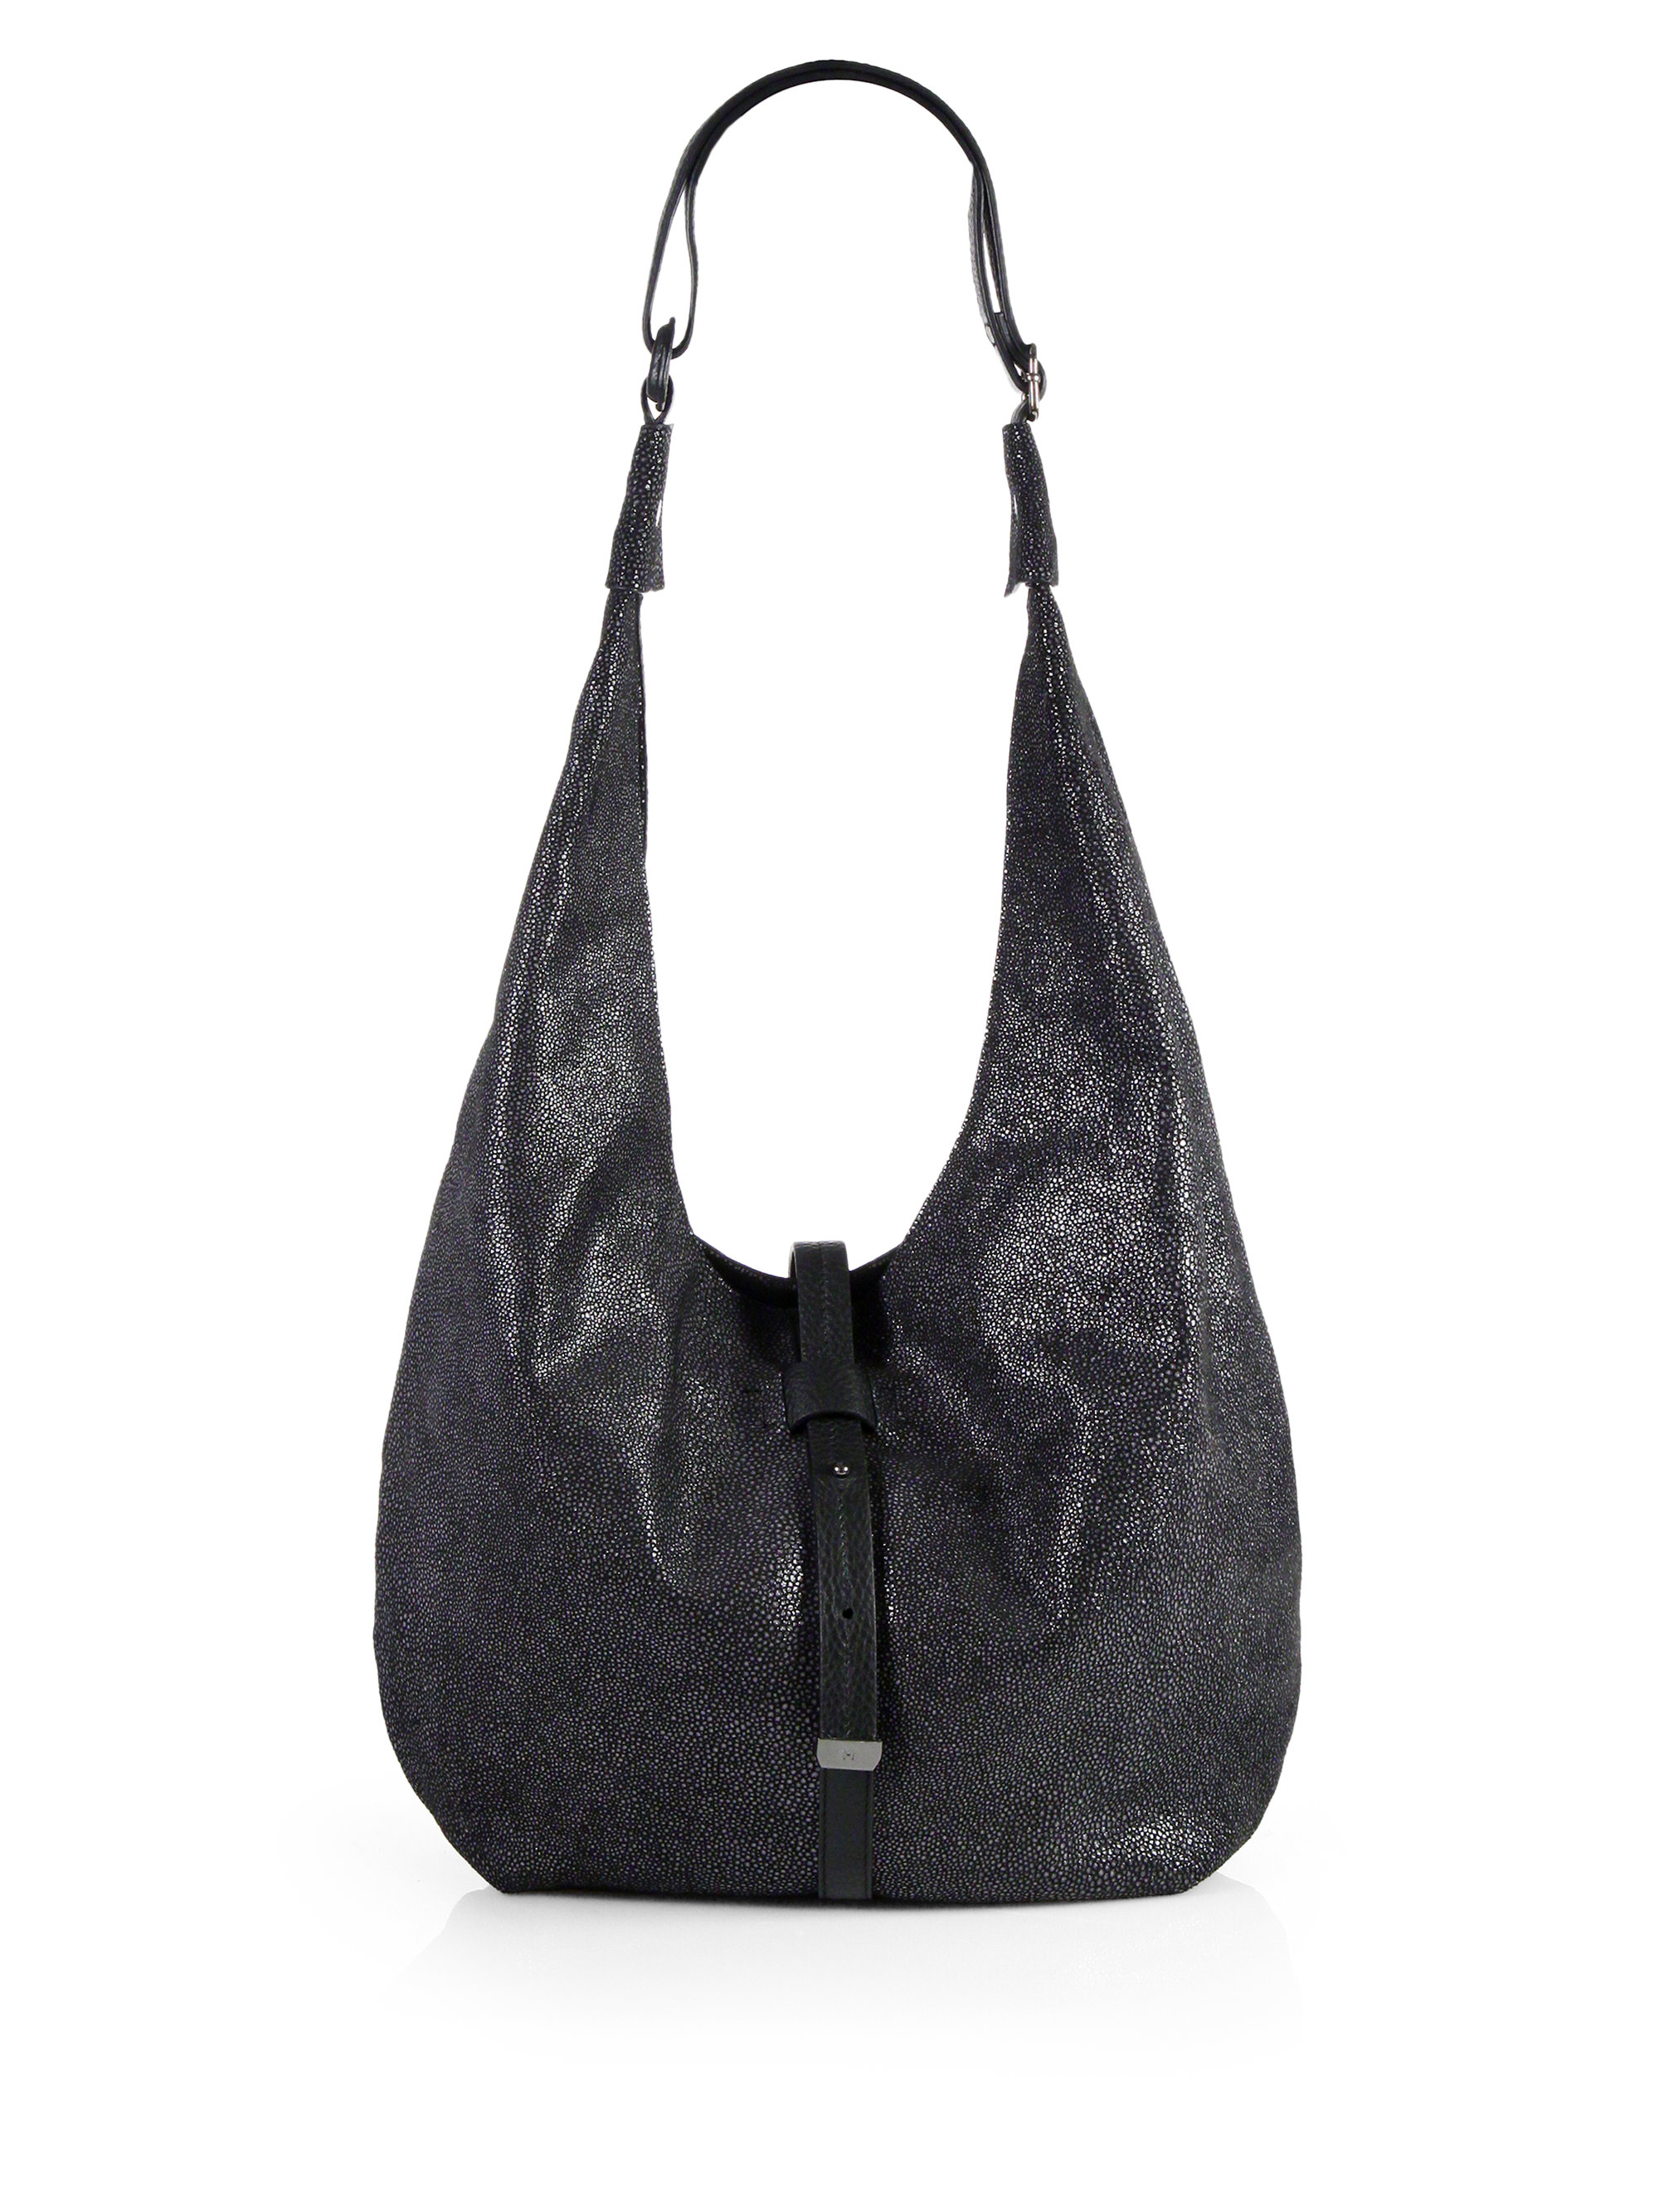 Lyst - Halston Metallic Leather Hobo Bag in Black